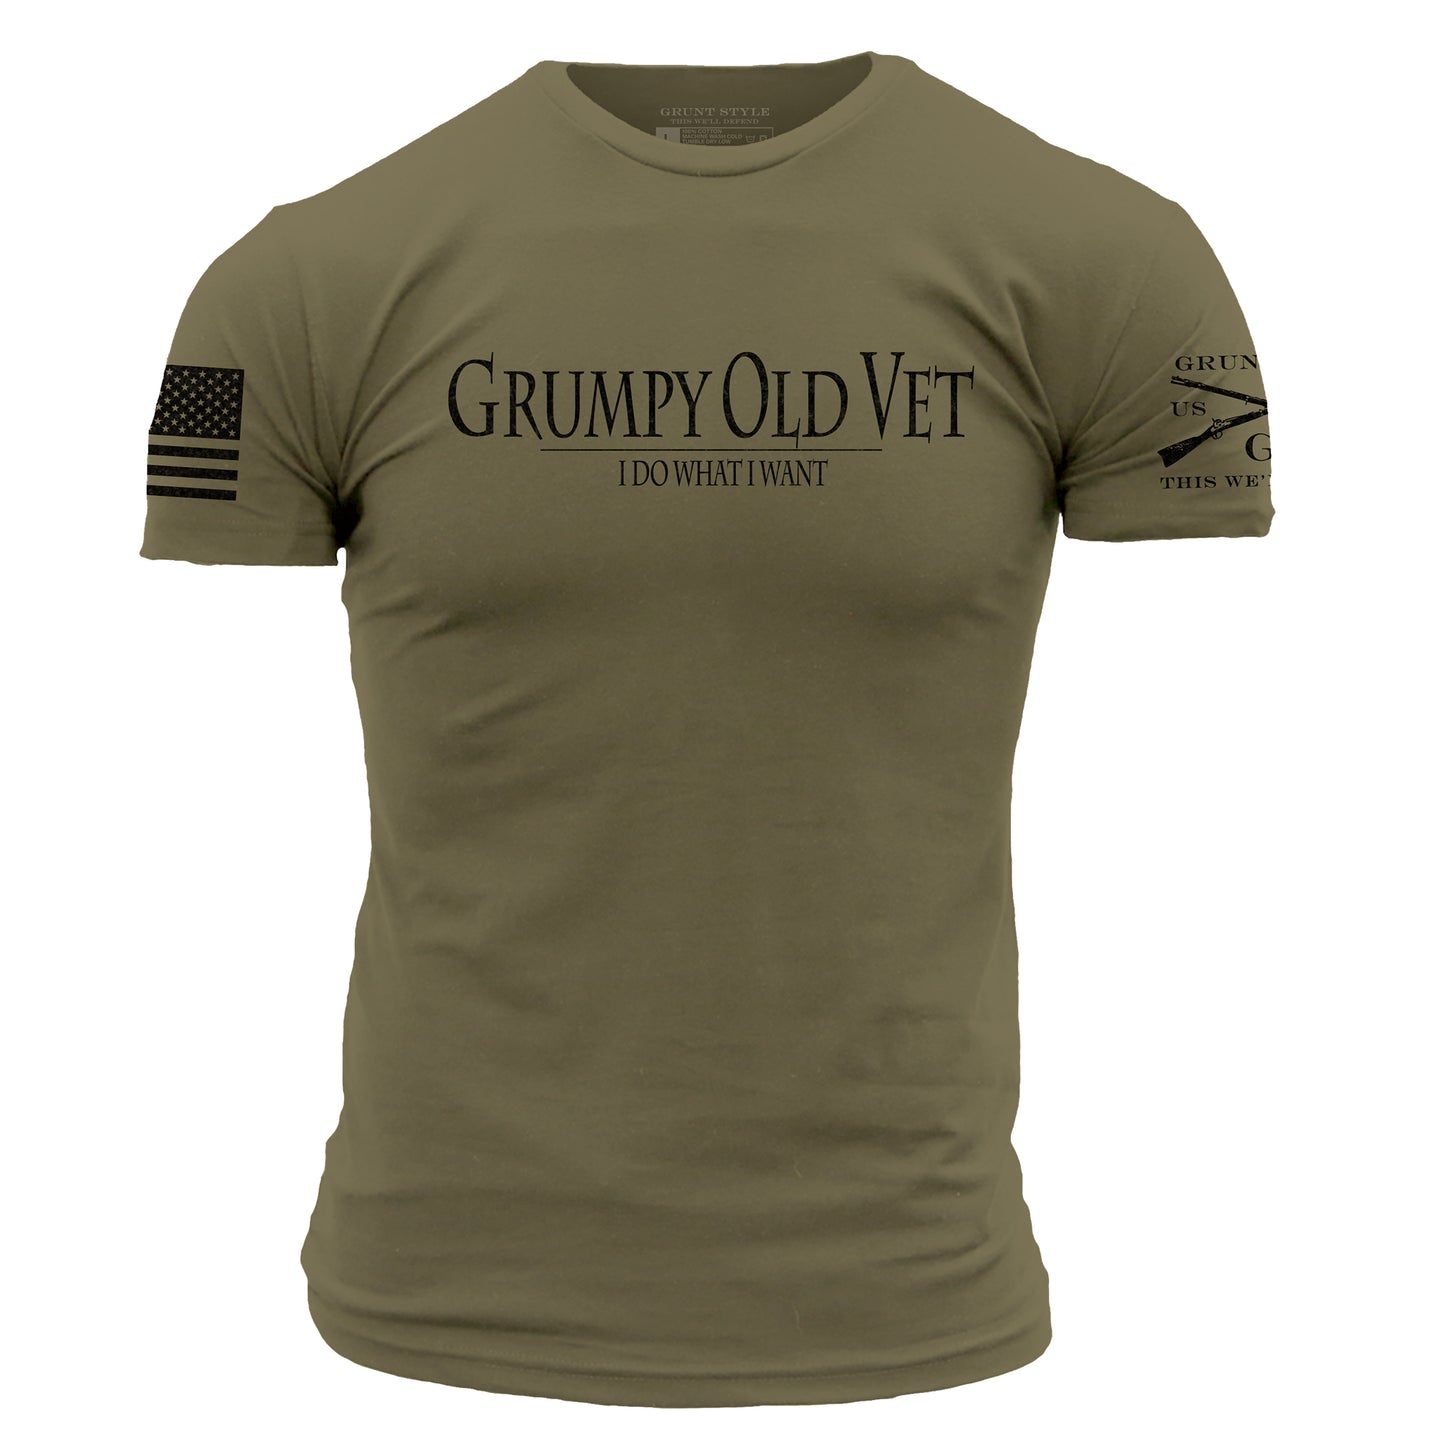 veteran t shirts - tshirt bundle deal 